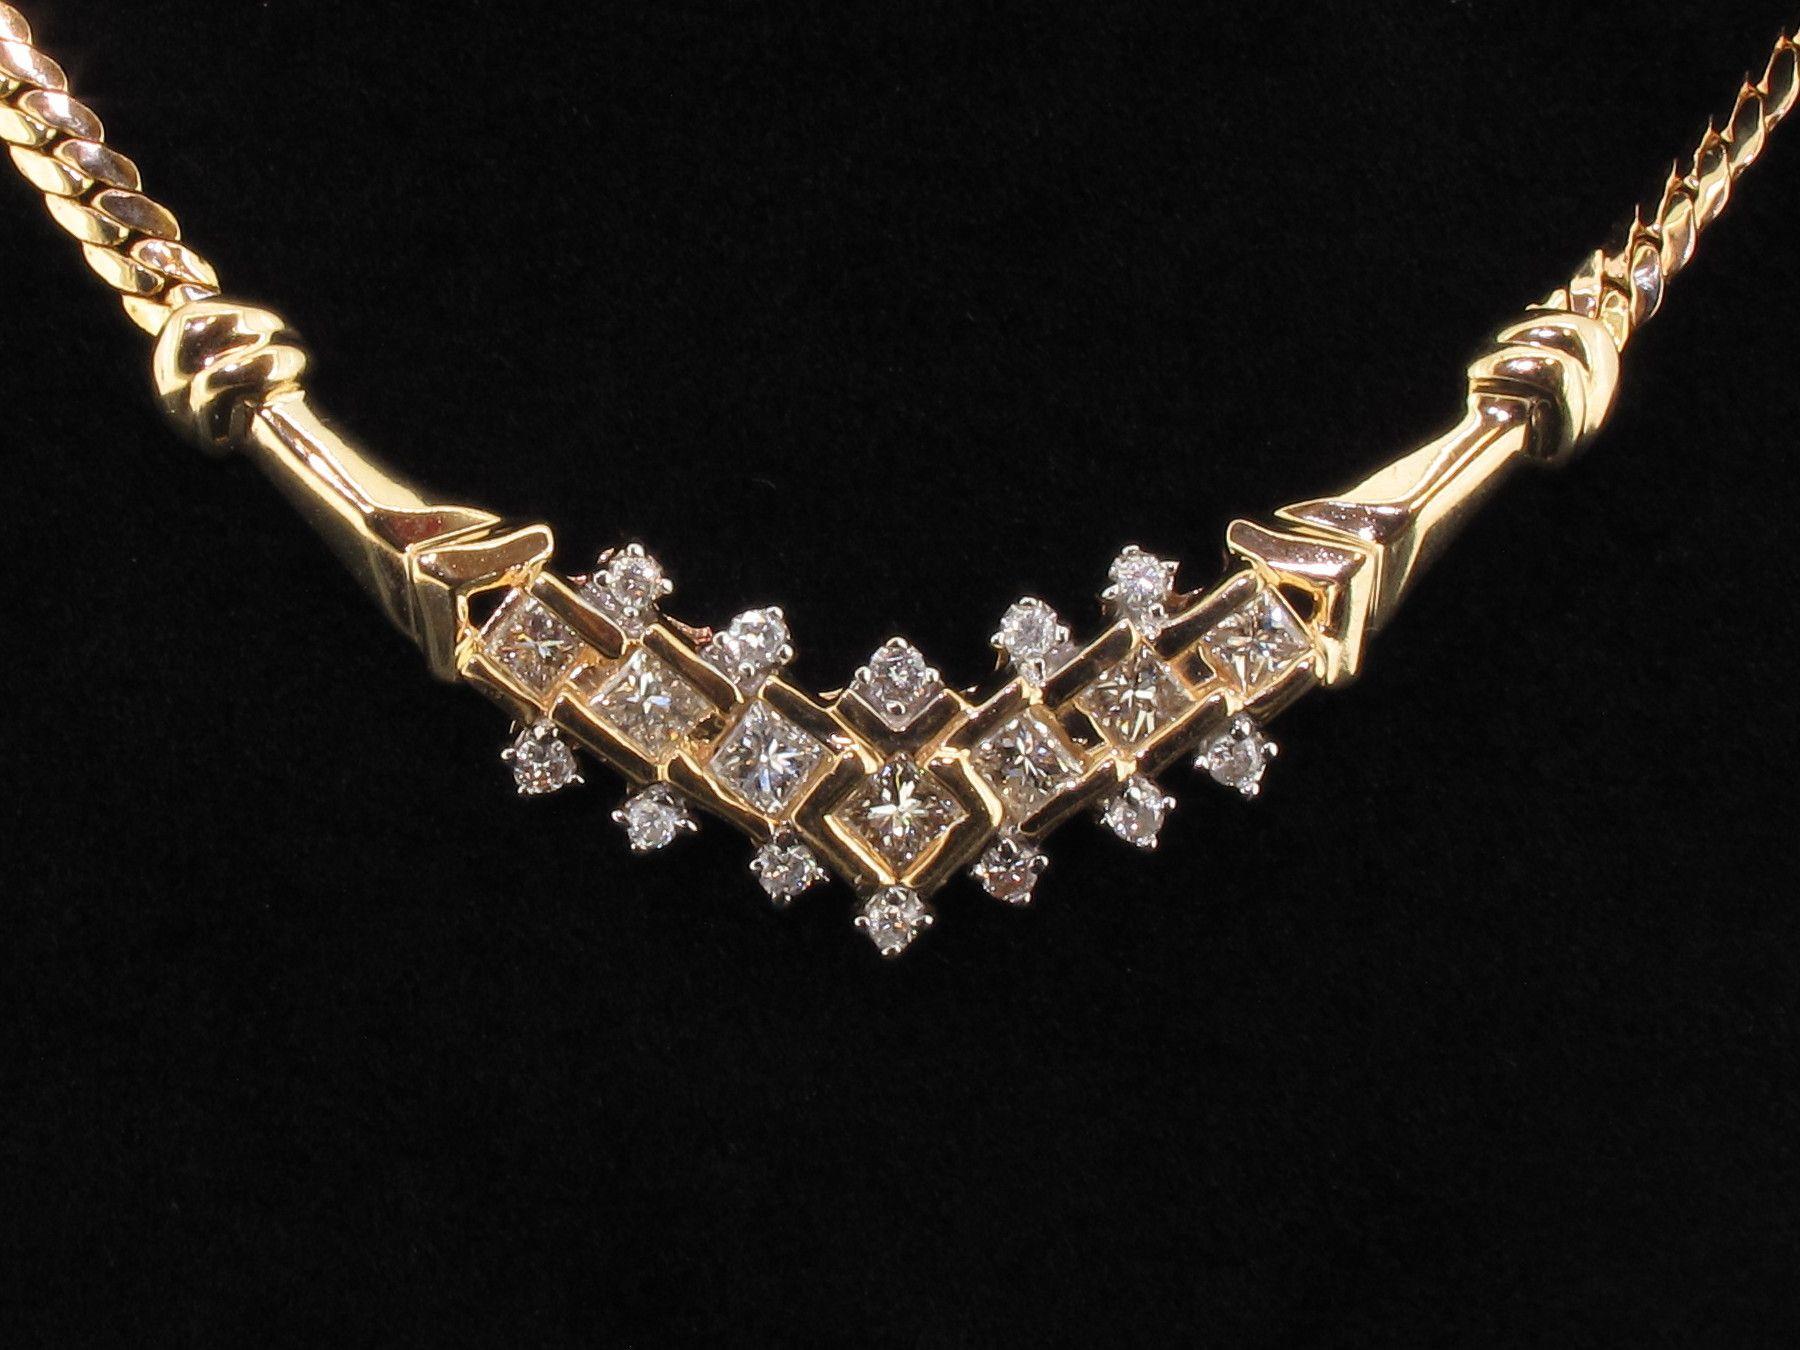 Jewelry Diamond Necklaces Hd Wallpaper High Resolution Jewelry Best Image. Diamond Necklace, Diamond, Jewelry